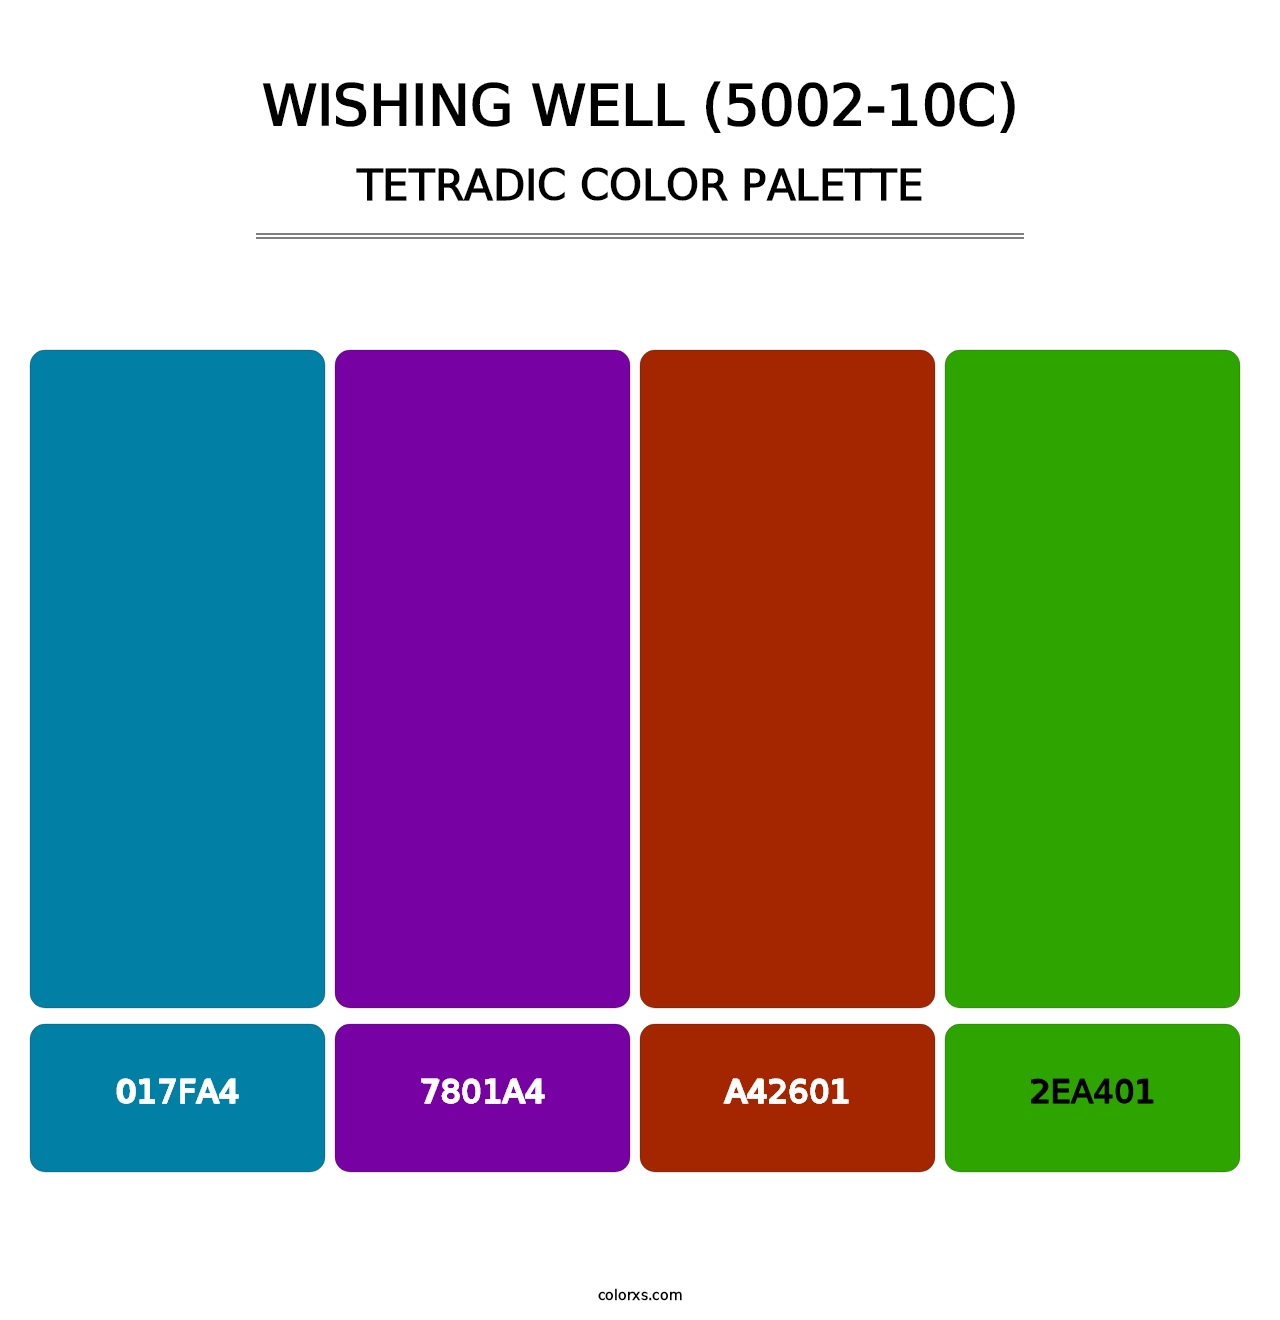 Wishing Well (5002-10C) - Tetradic Color Palette